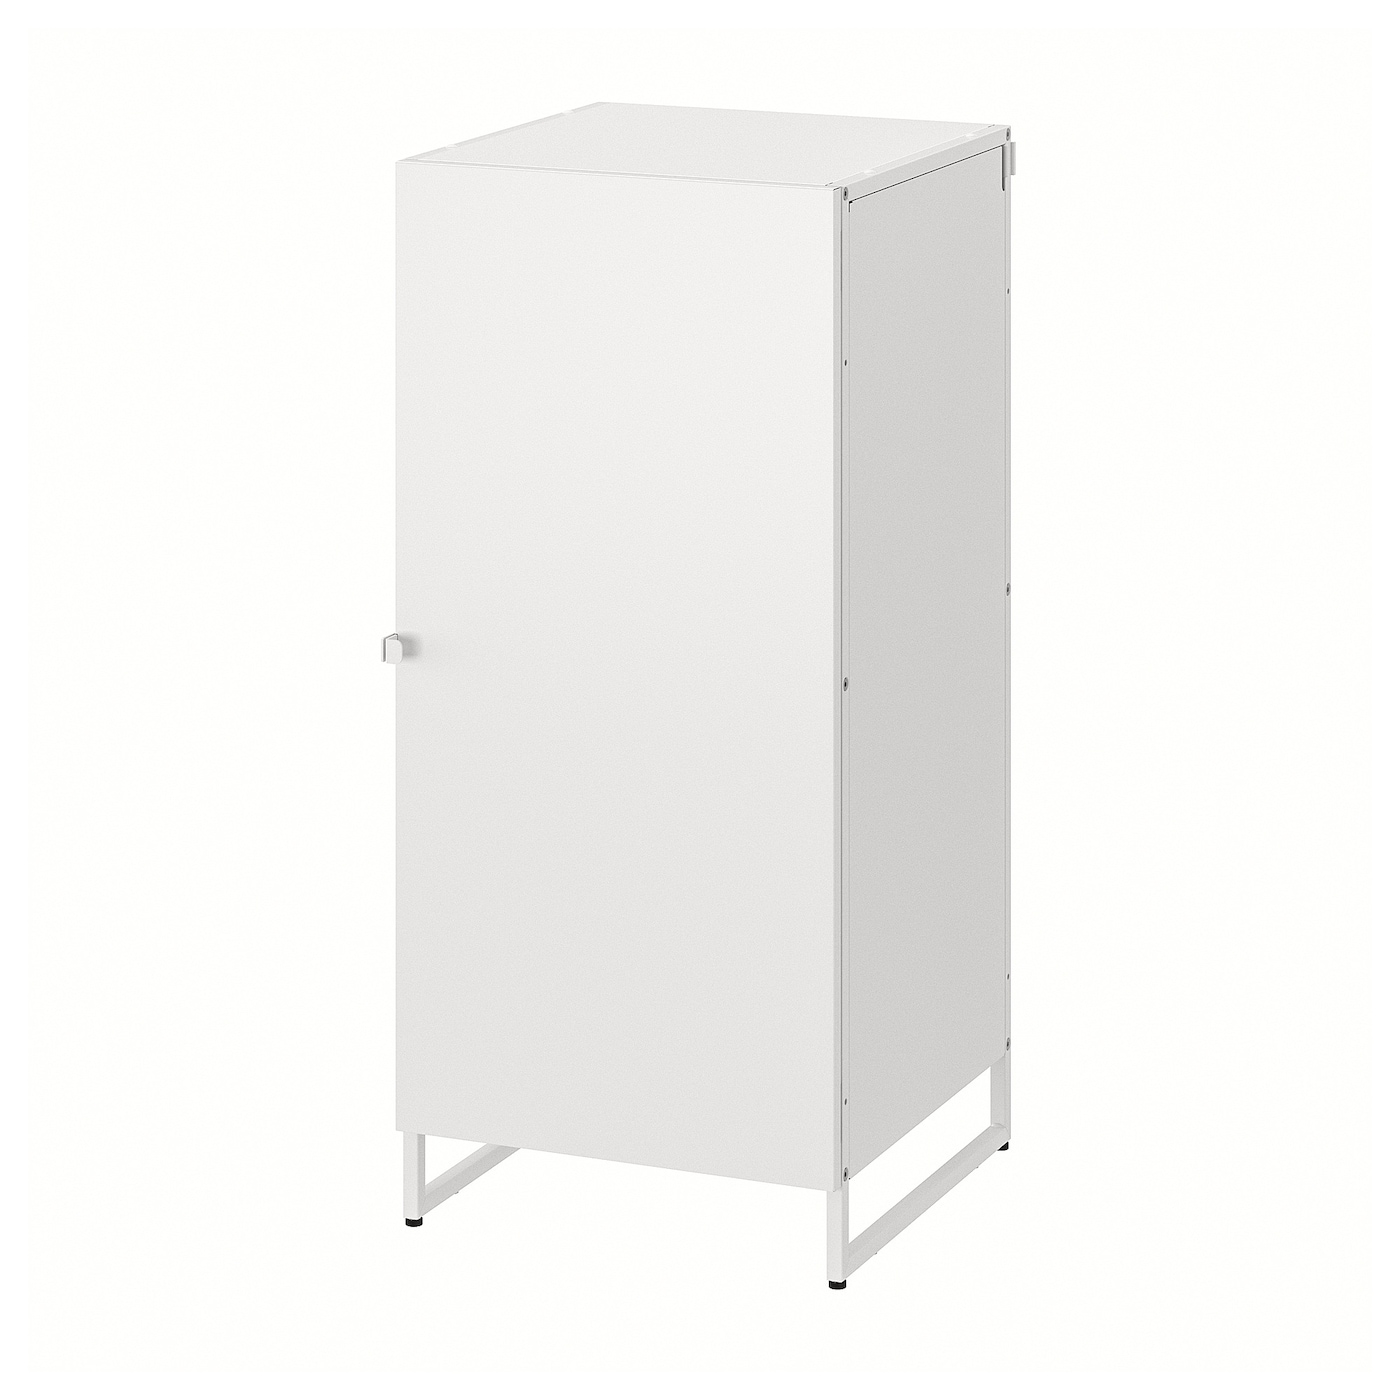 Книжный шкаф - JOSTEIN IKEA/ ЙОСТЕЙН ИКЕА,  90х41 см, белый